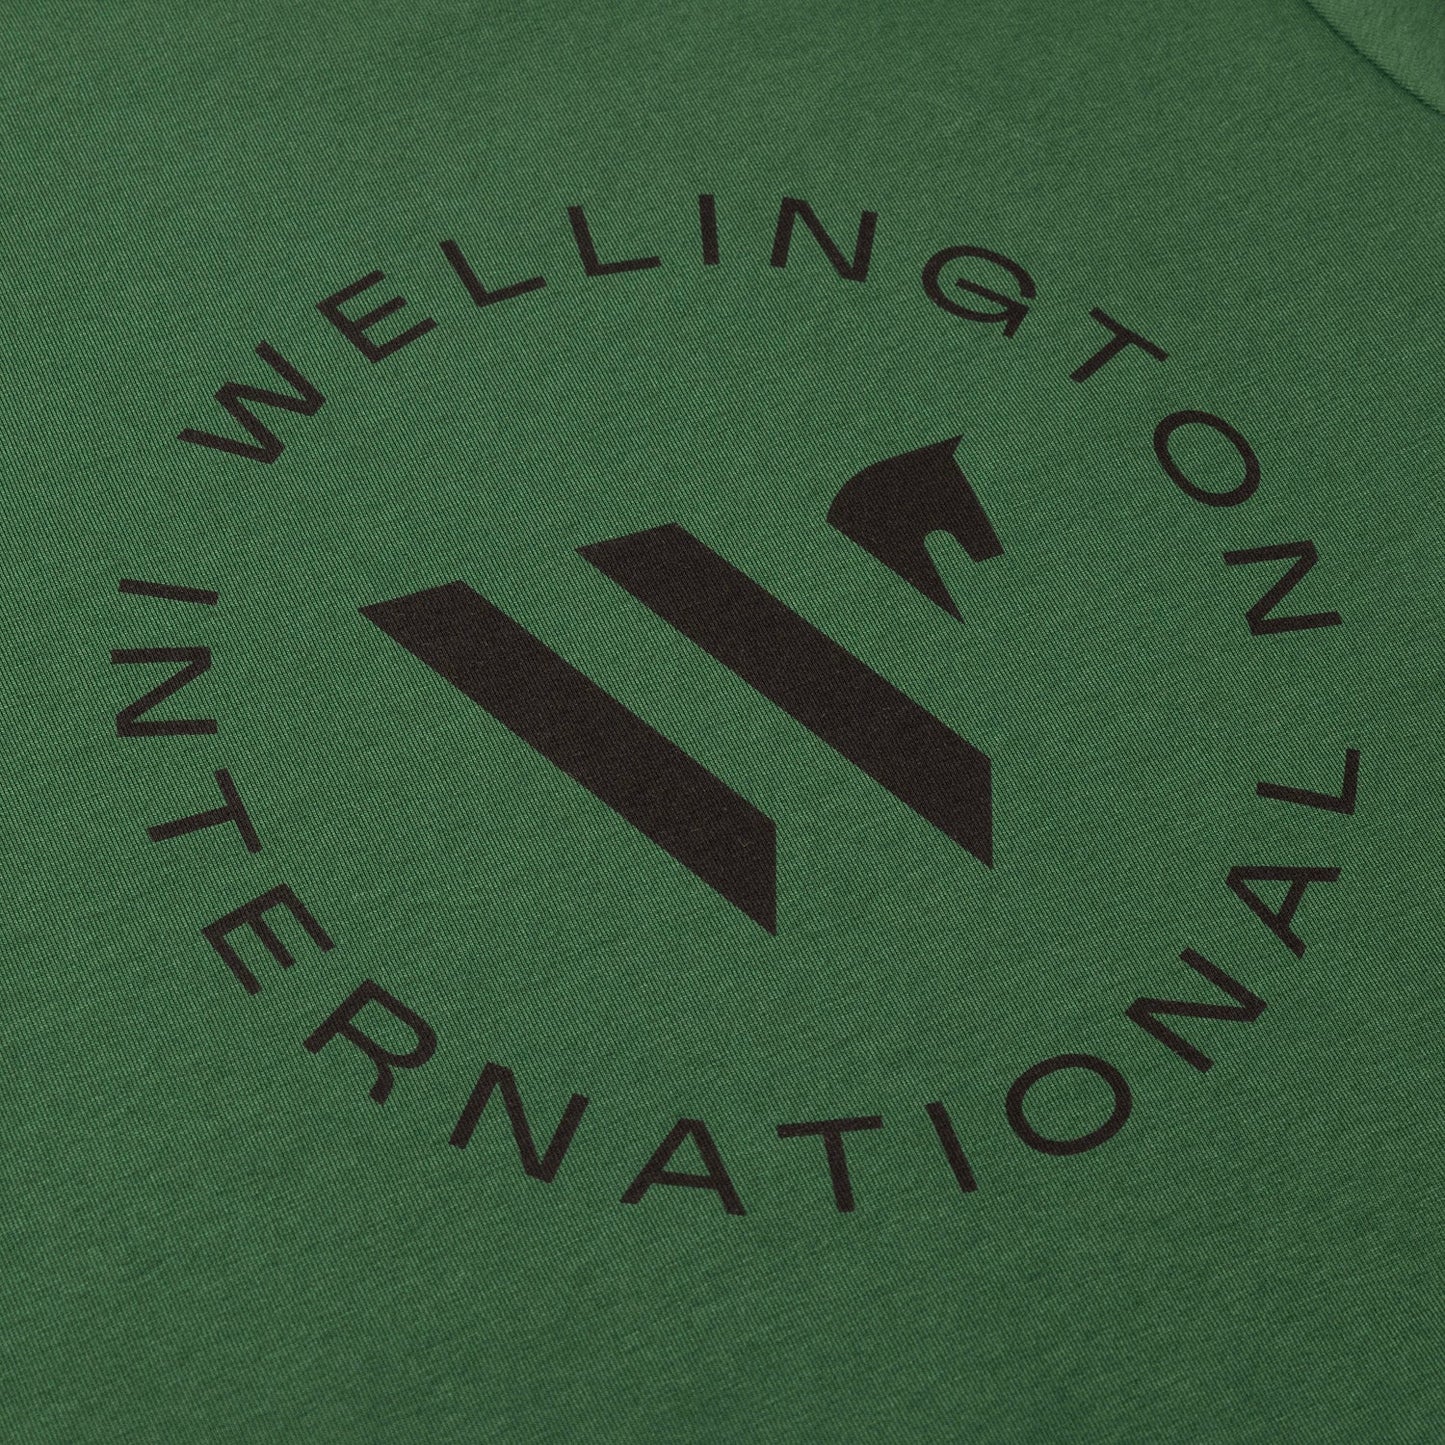 Wellington International Junior Light Sweatshirt